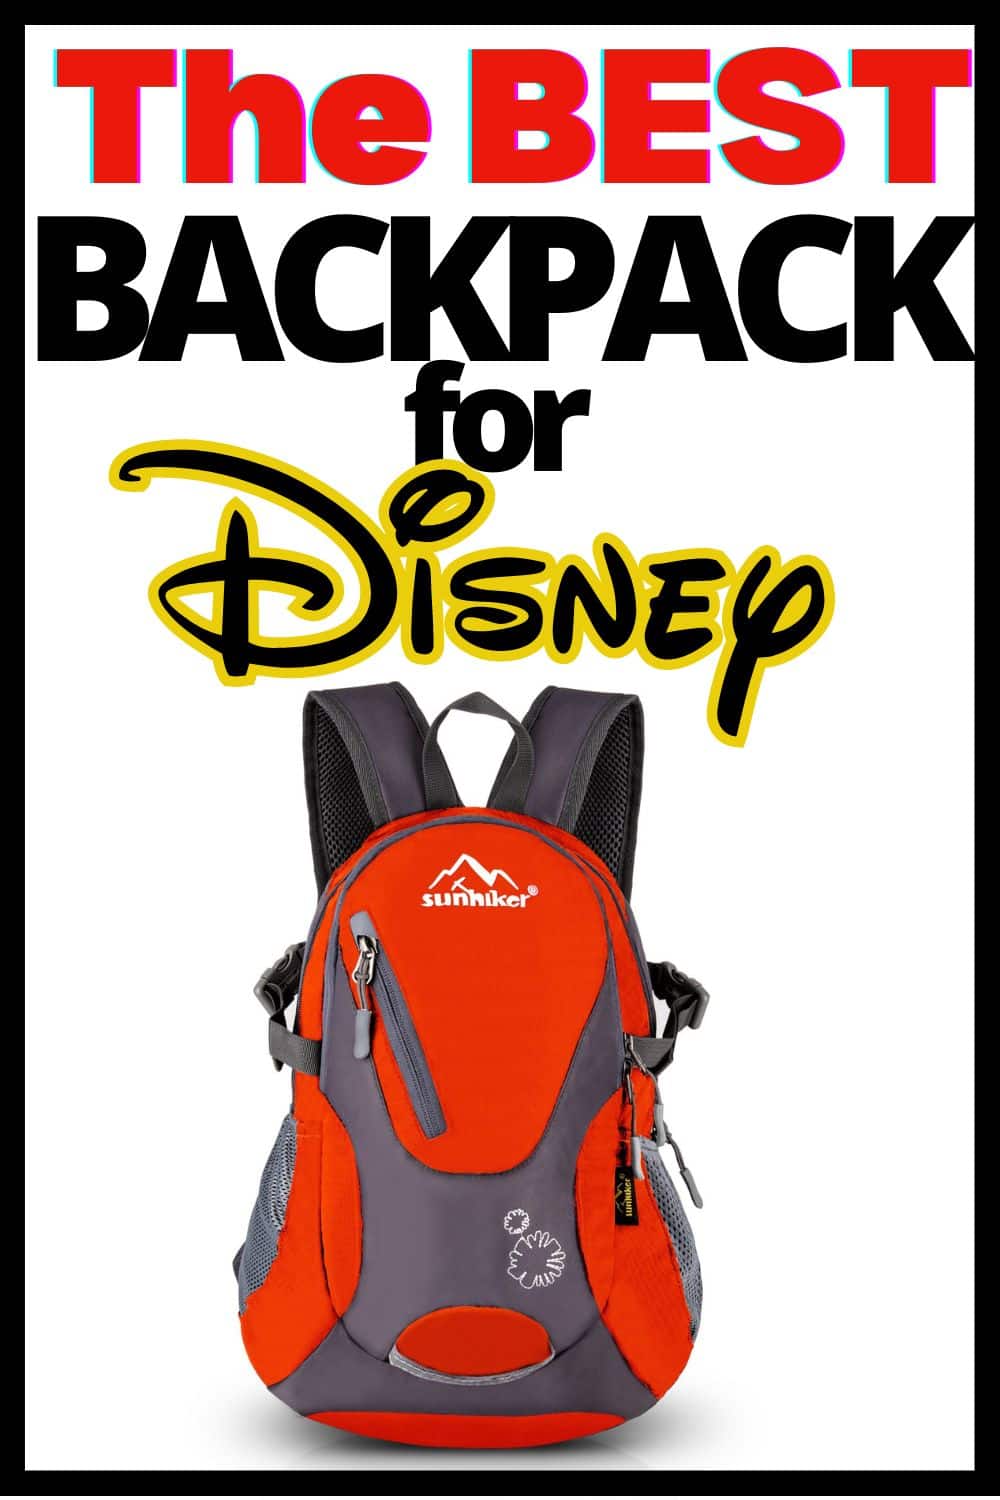 The Best Backpack for Disney World